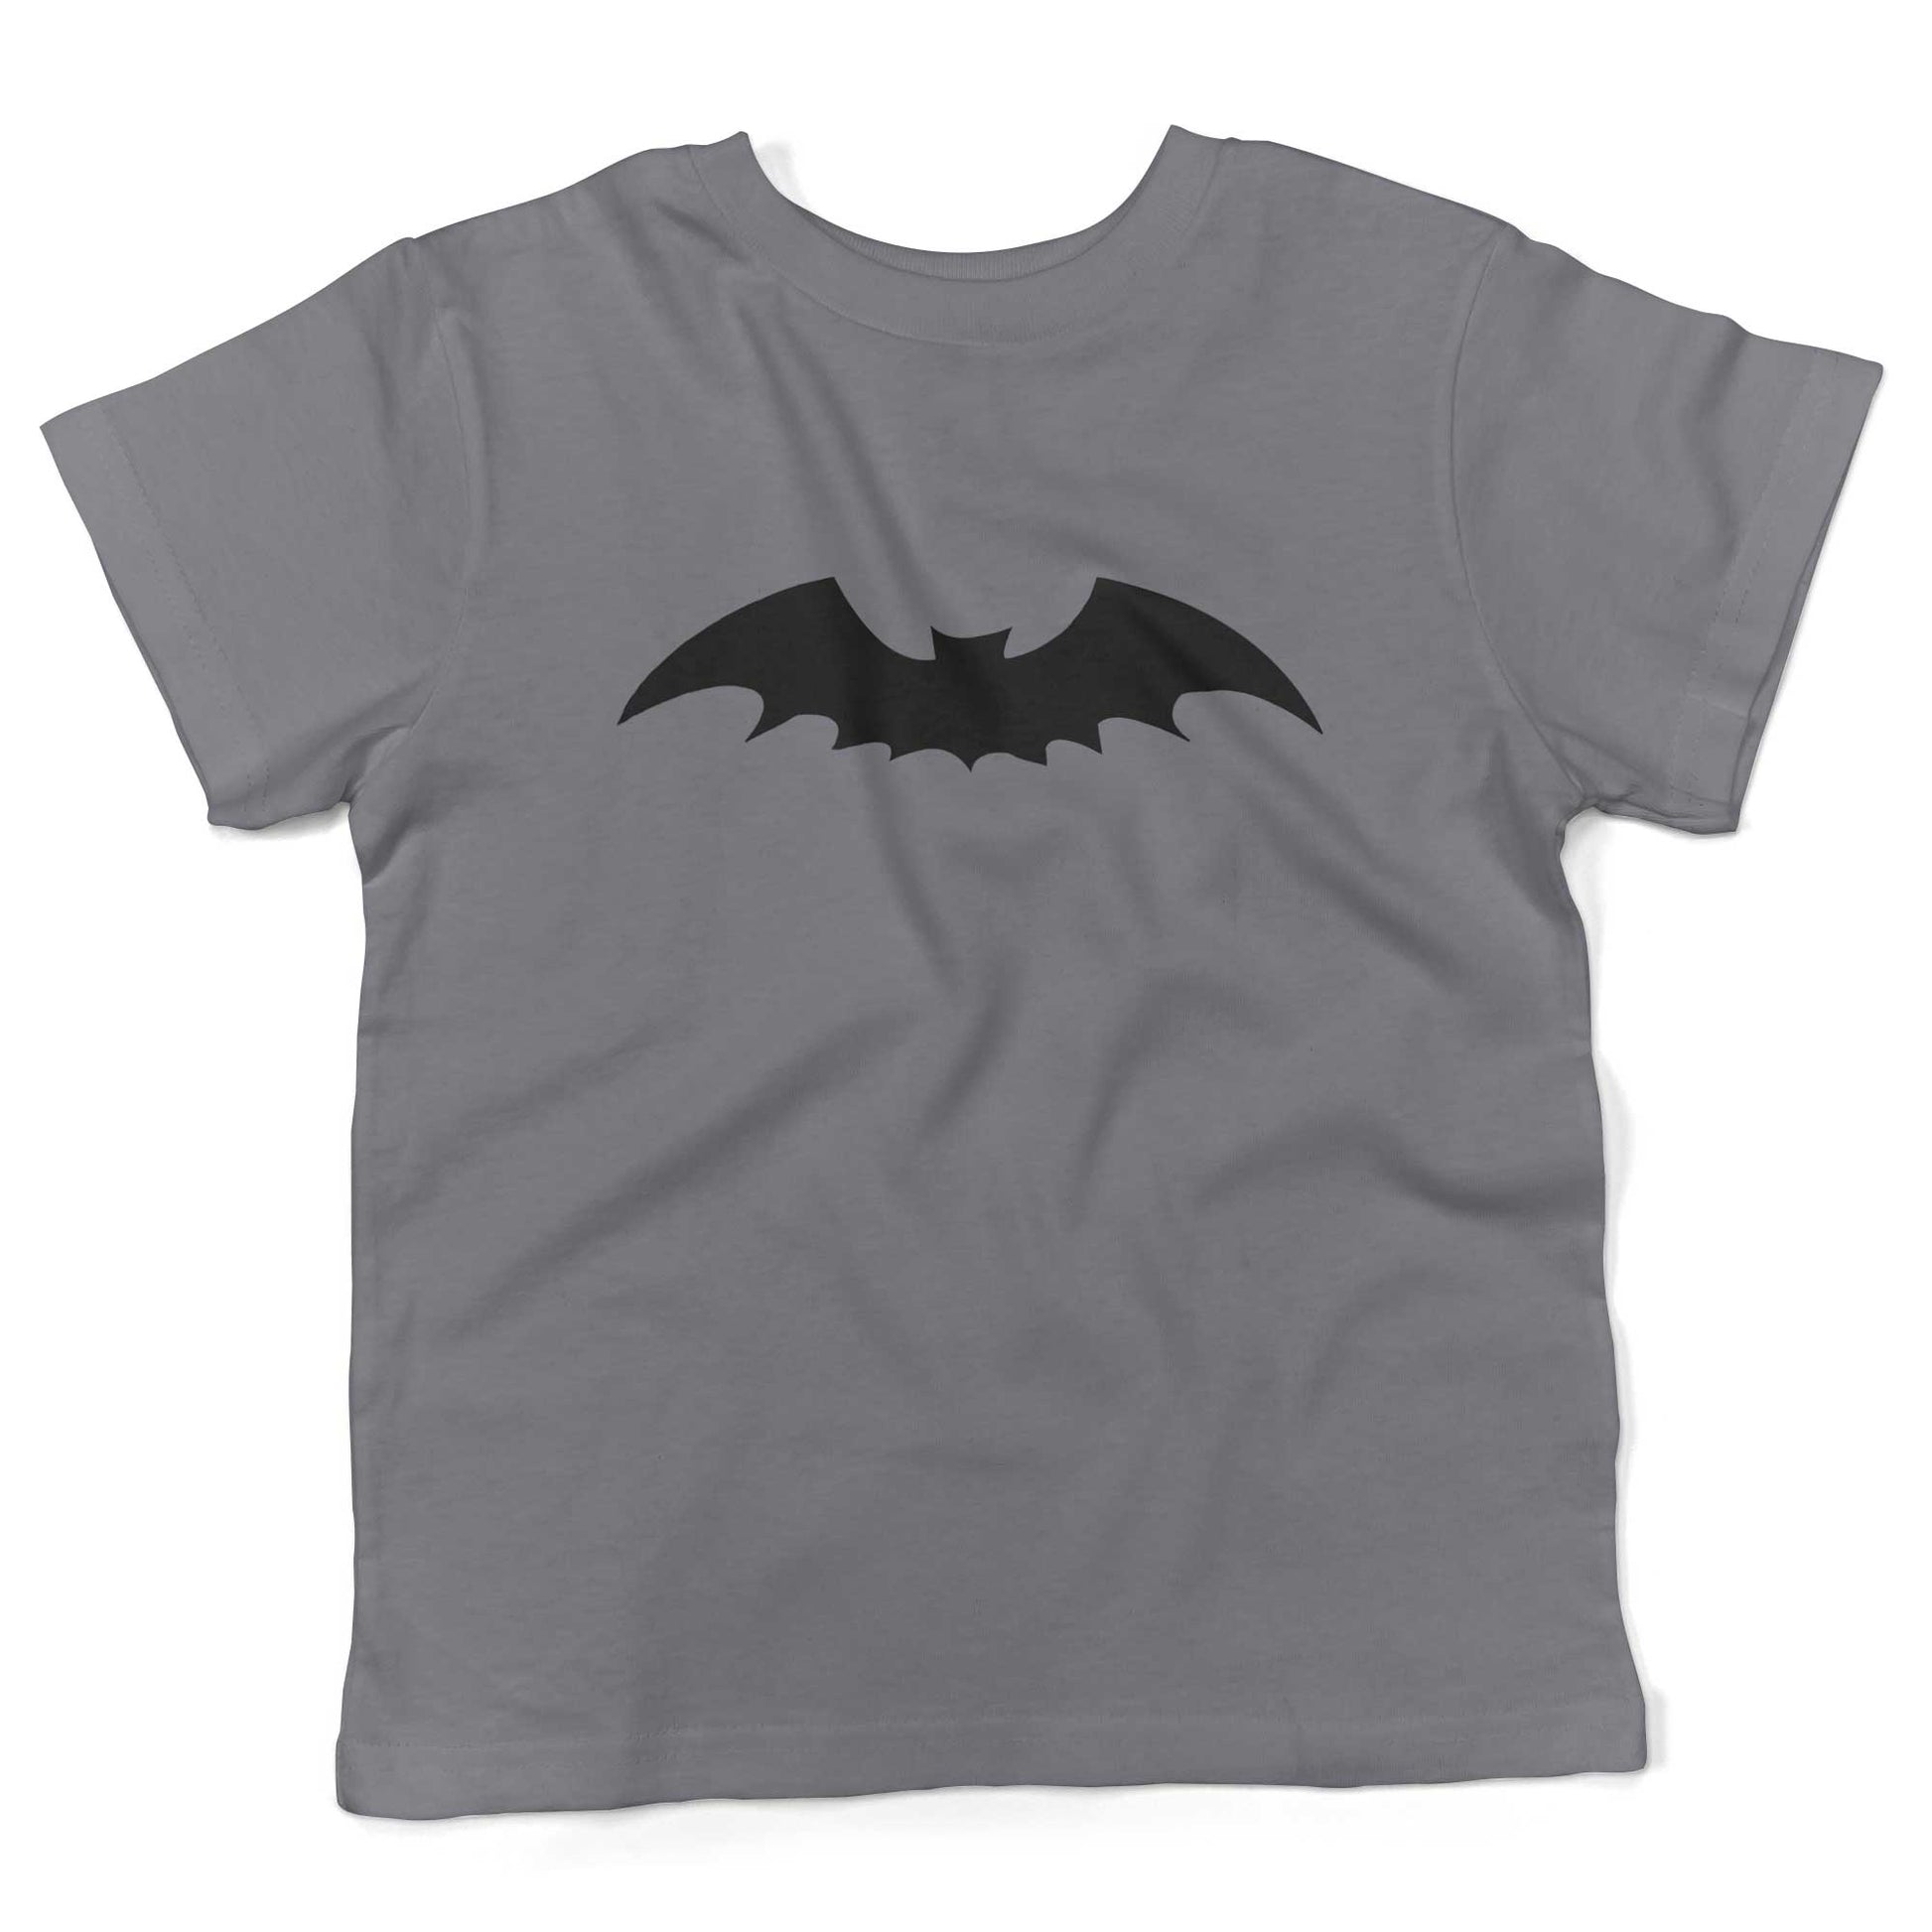 Gothic Bat Toddler Shirt-Slate-2T